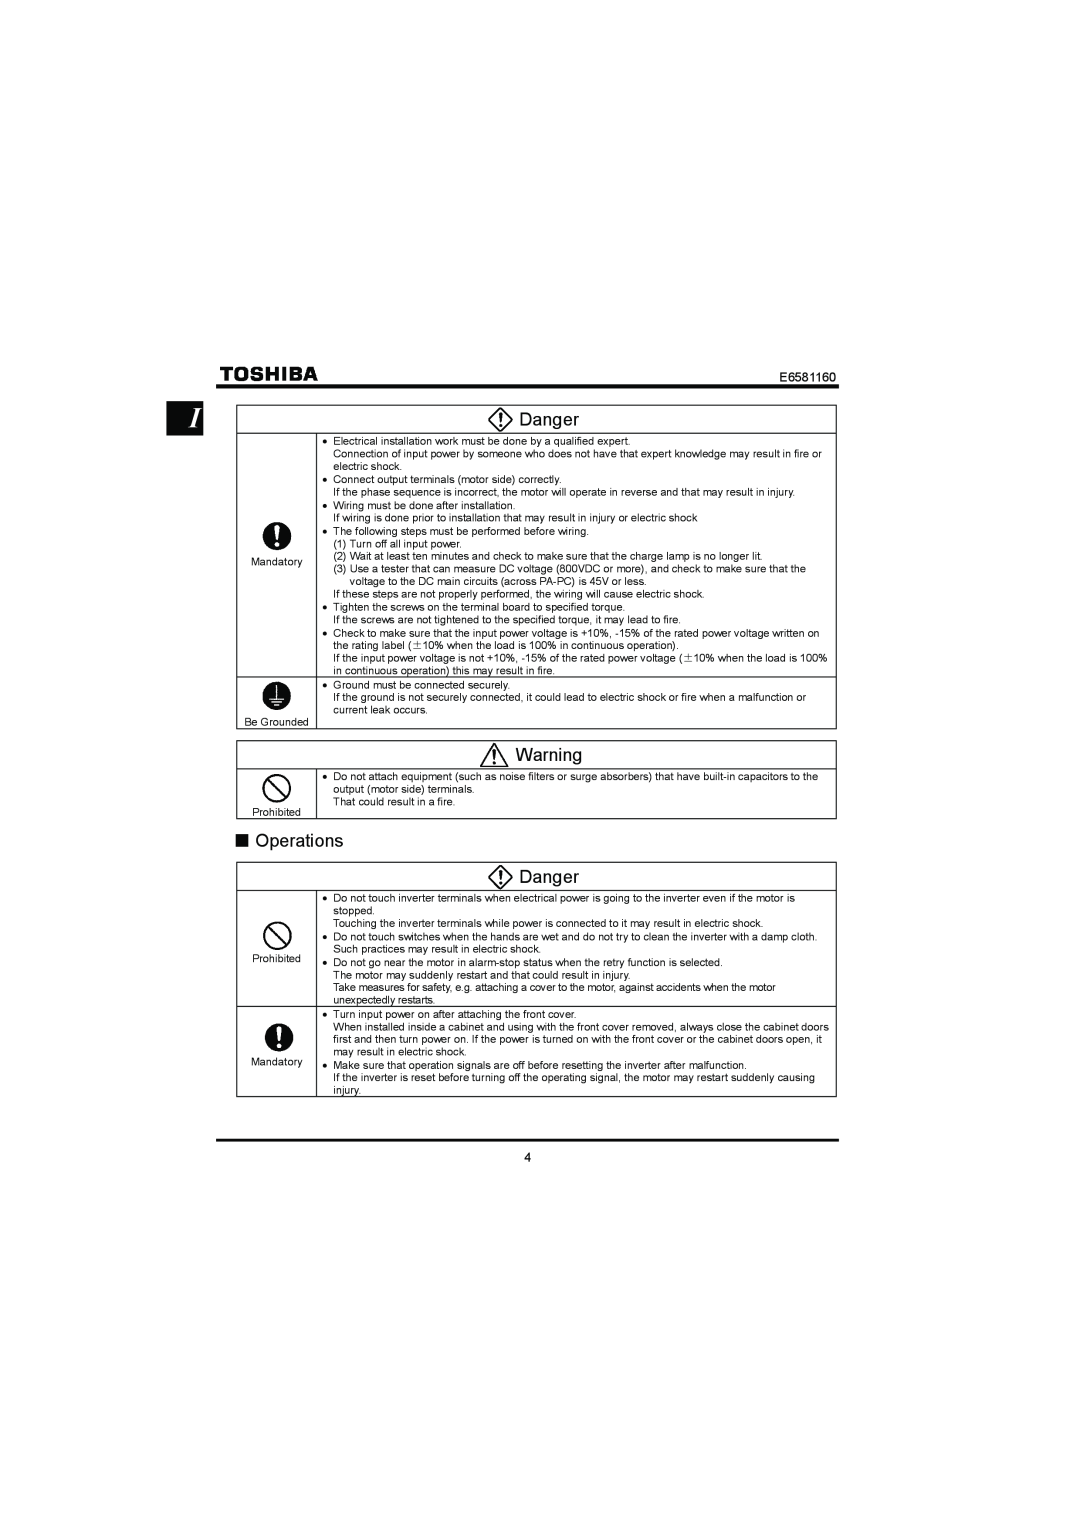 Toshiba VF-S11 manual QOperations Danger, E6581160 